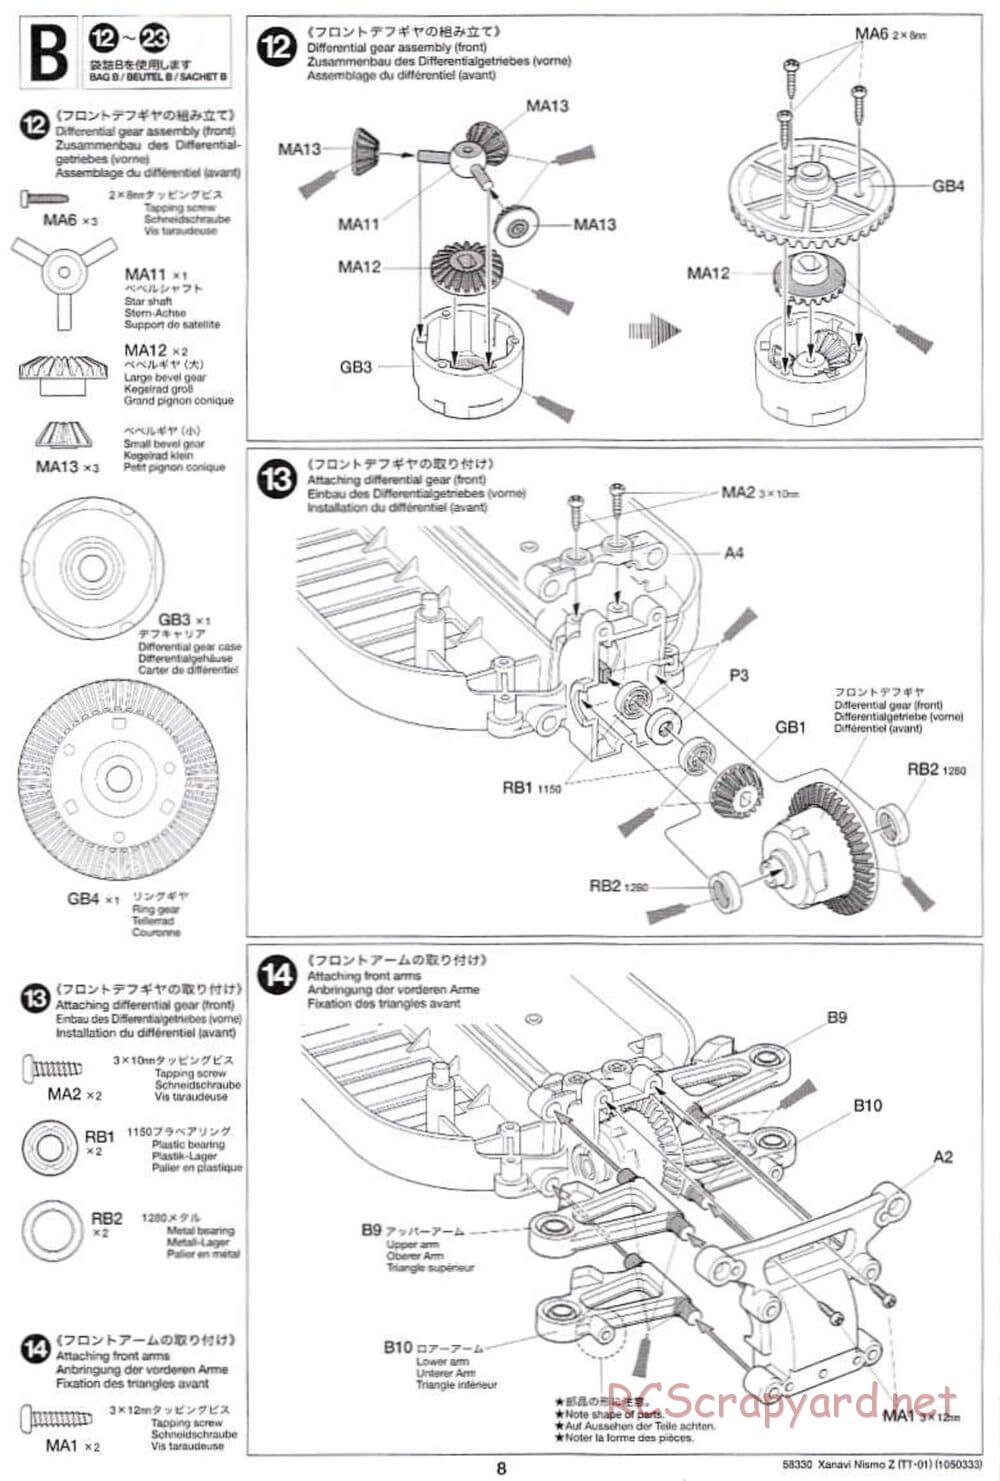 Tamiya - Xanavi Nismo Z - TT-01 Chassis - Manual - Page 8